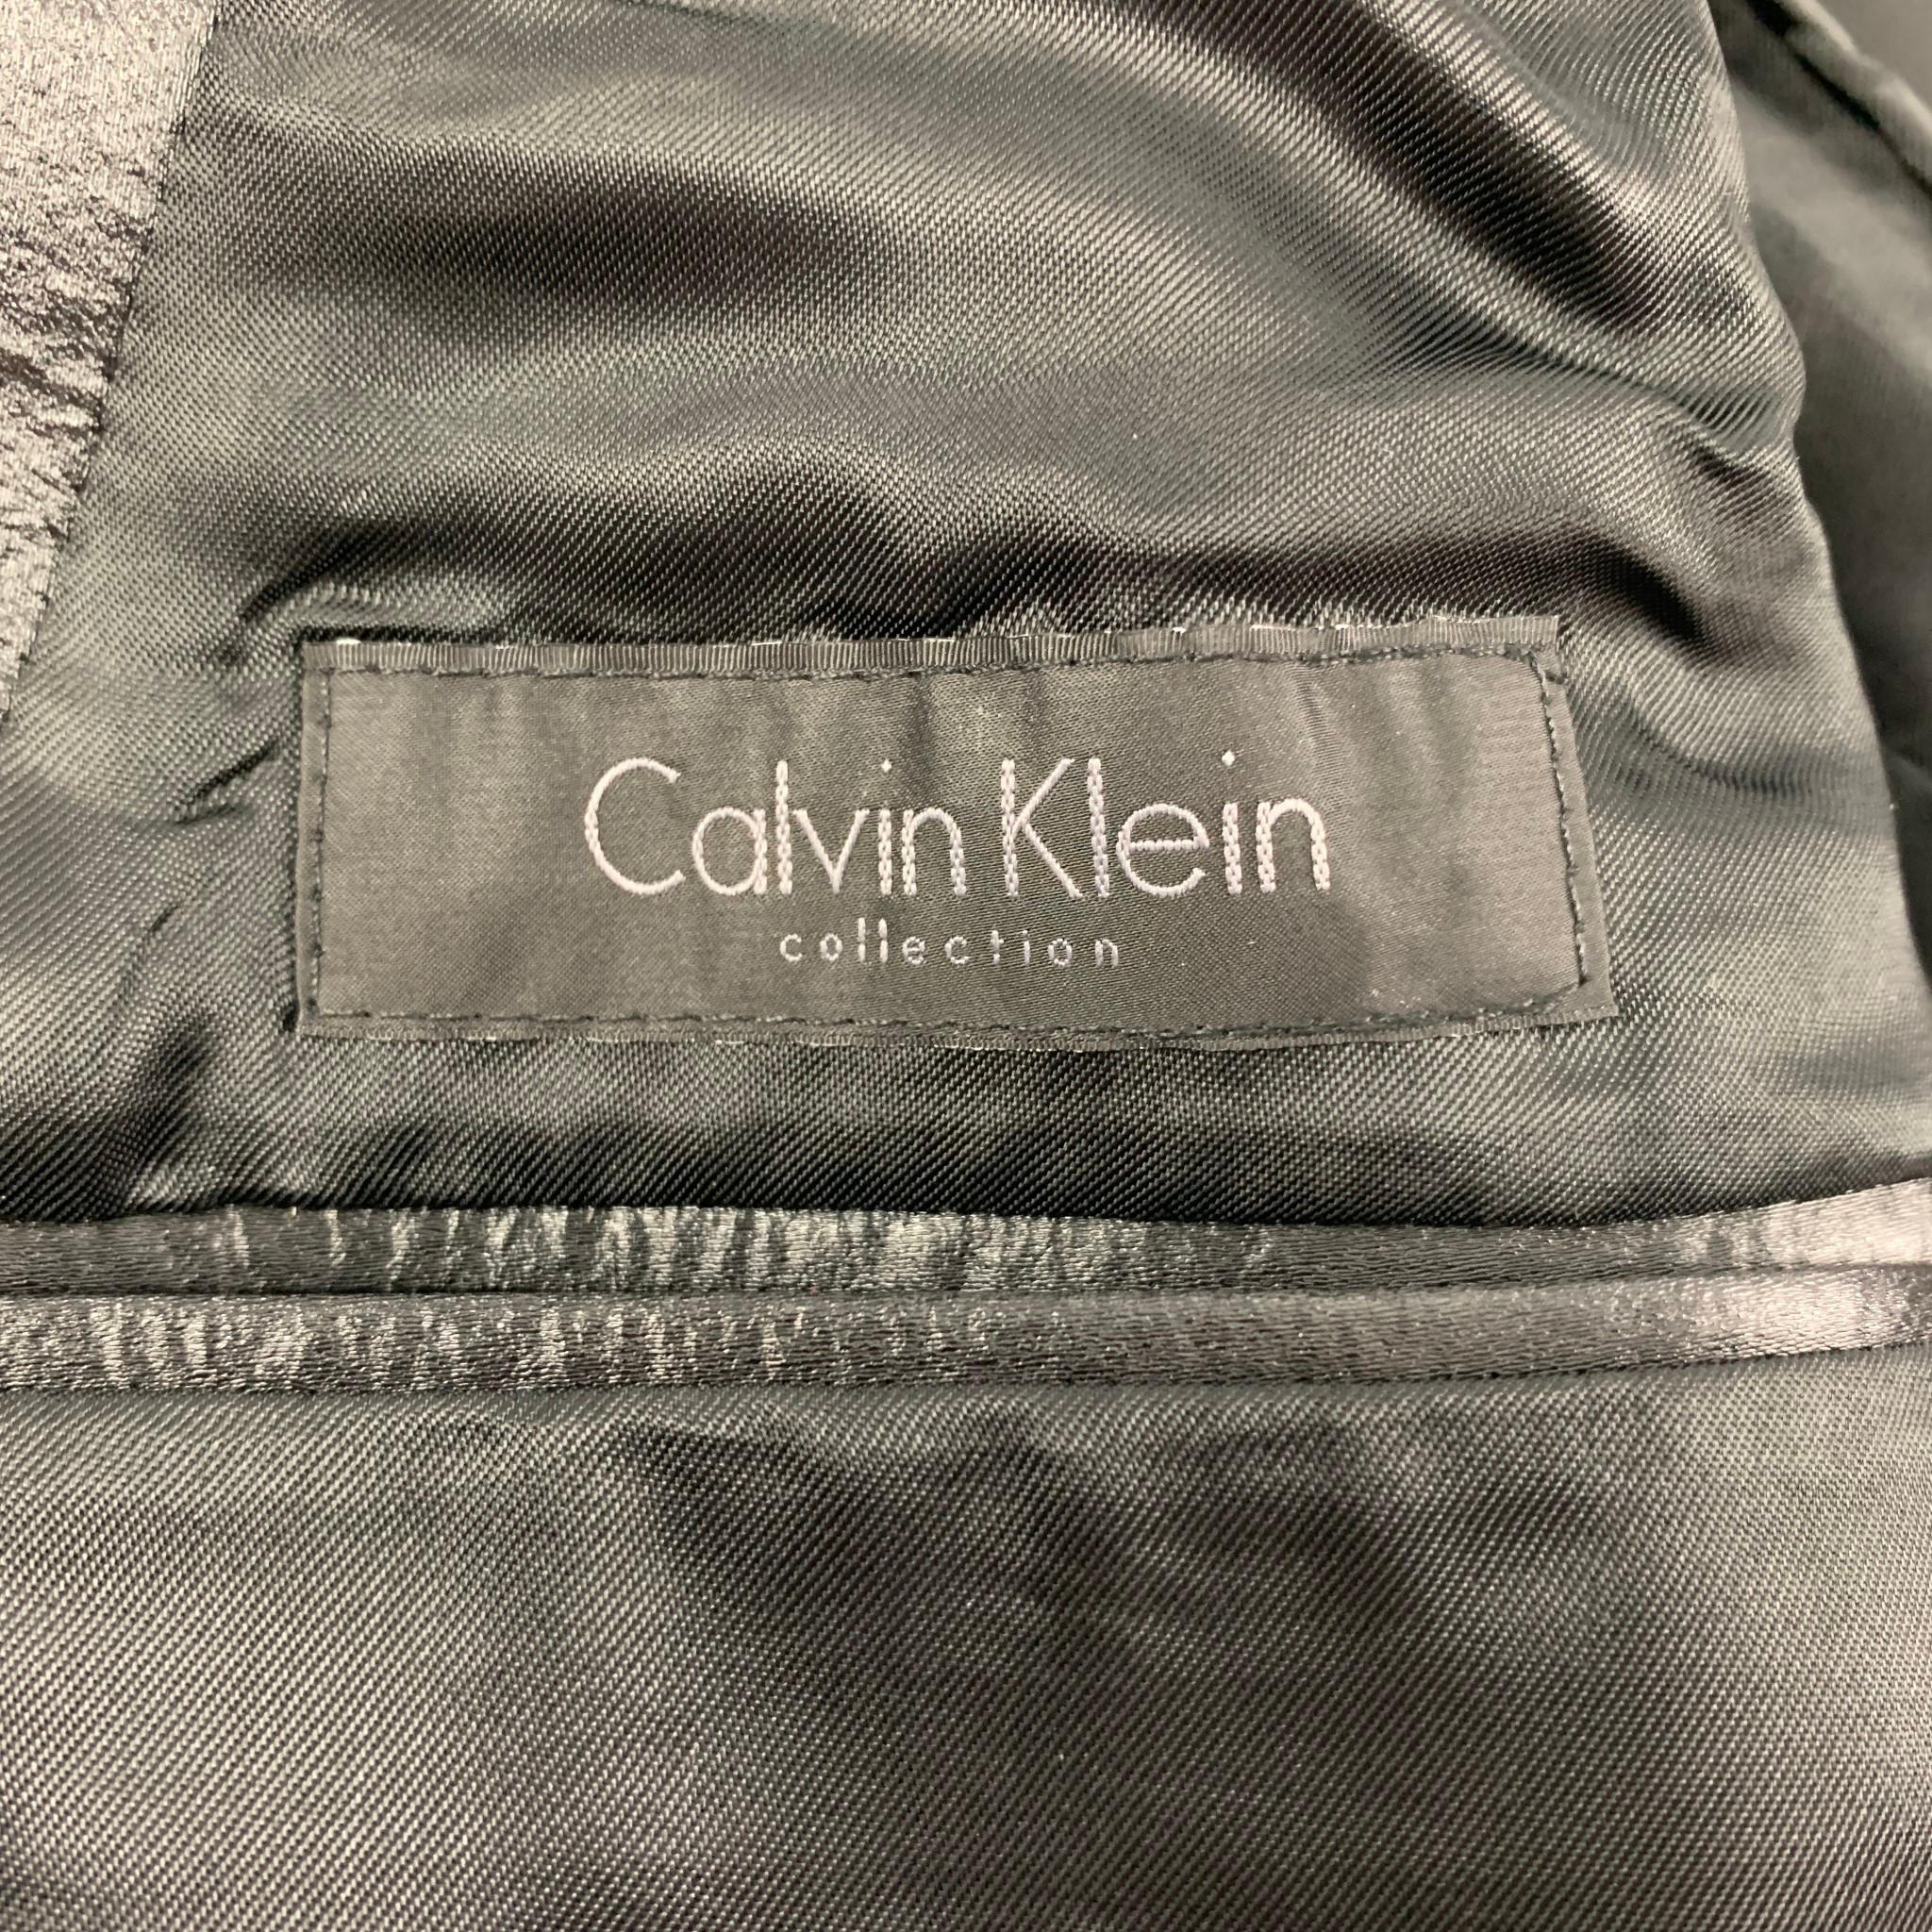 CALVIN KLEIN COLLECTION Size 36 Regular Black Textured Wool Sport Coat 4